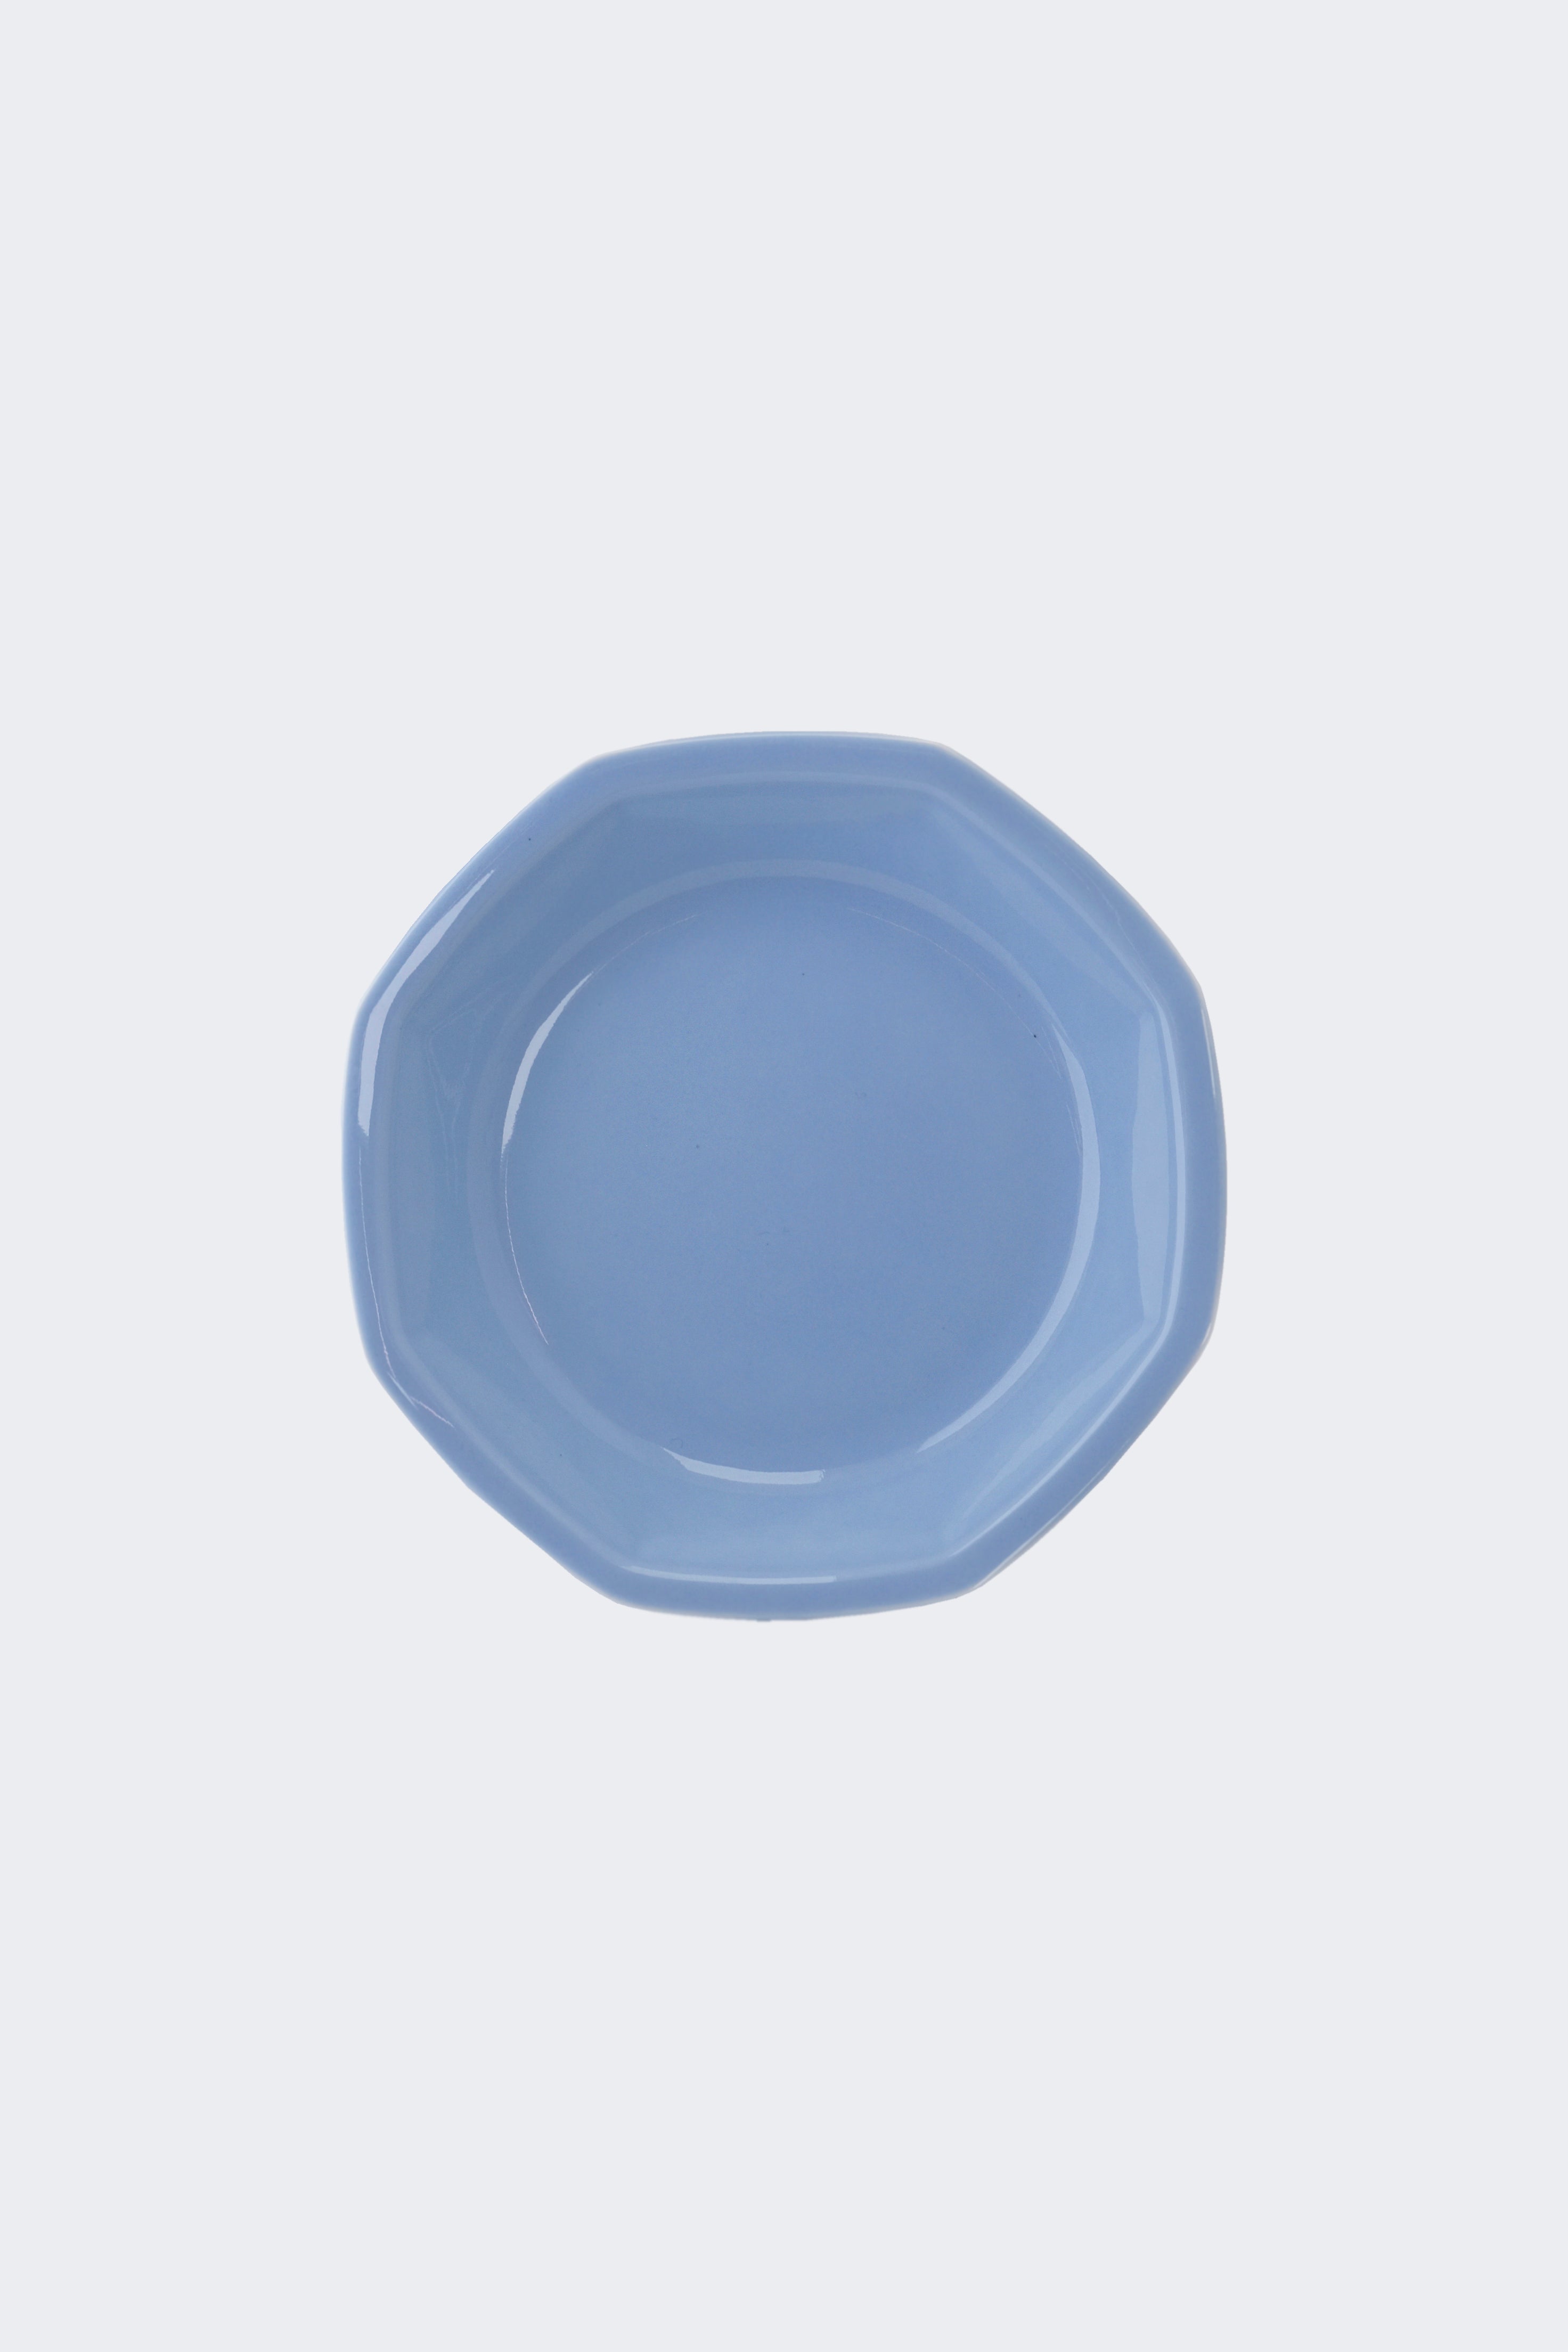 Octangle deep plate light blue-Ogre-[interior]-[design]-KIOSK48TH